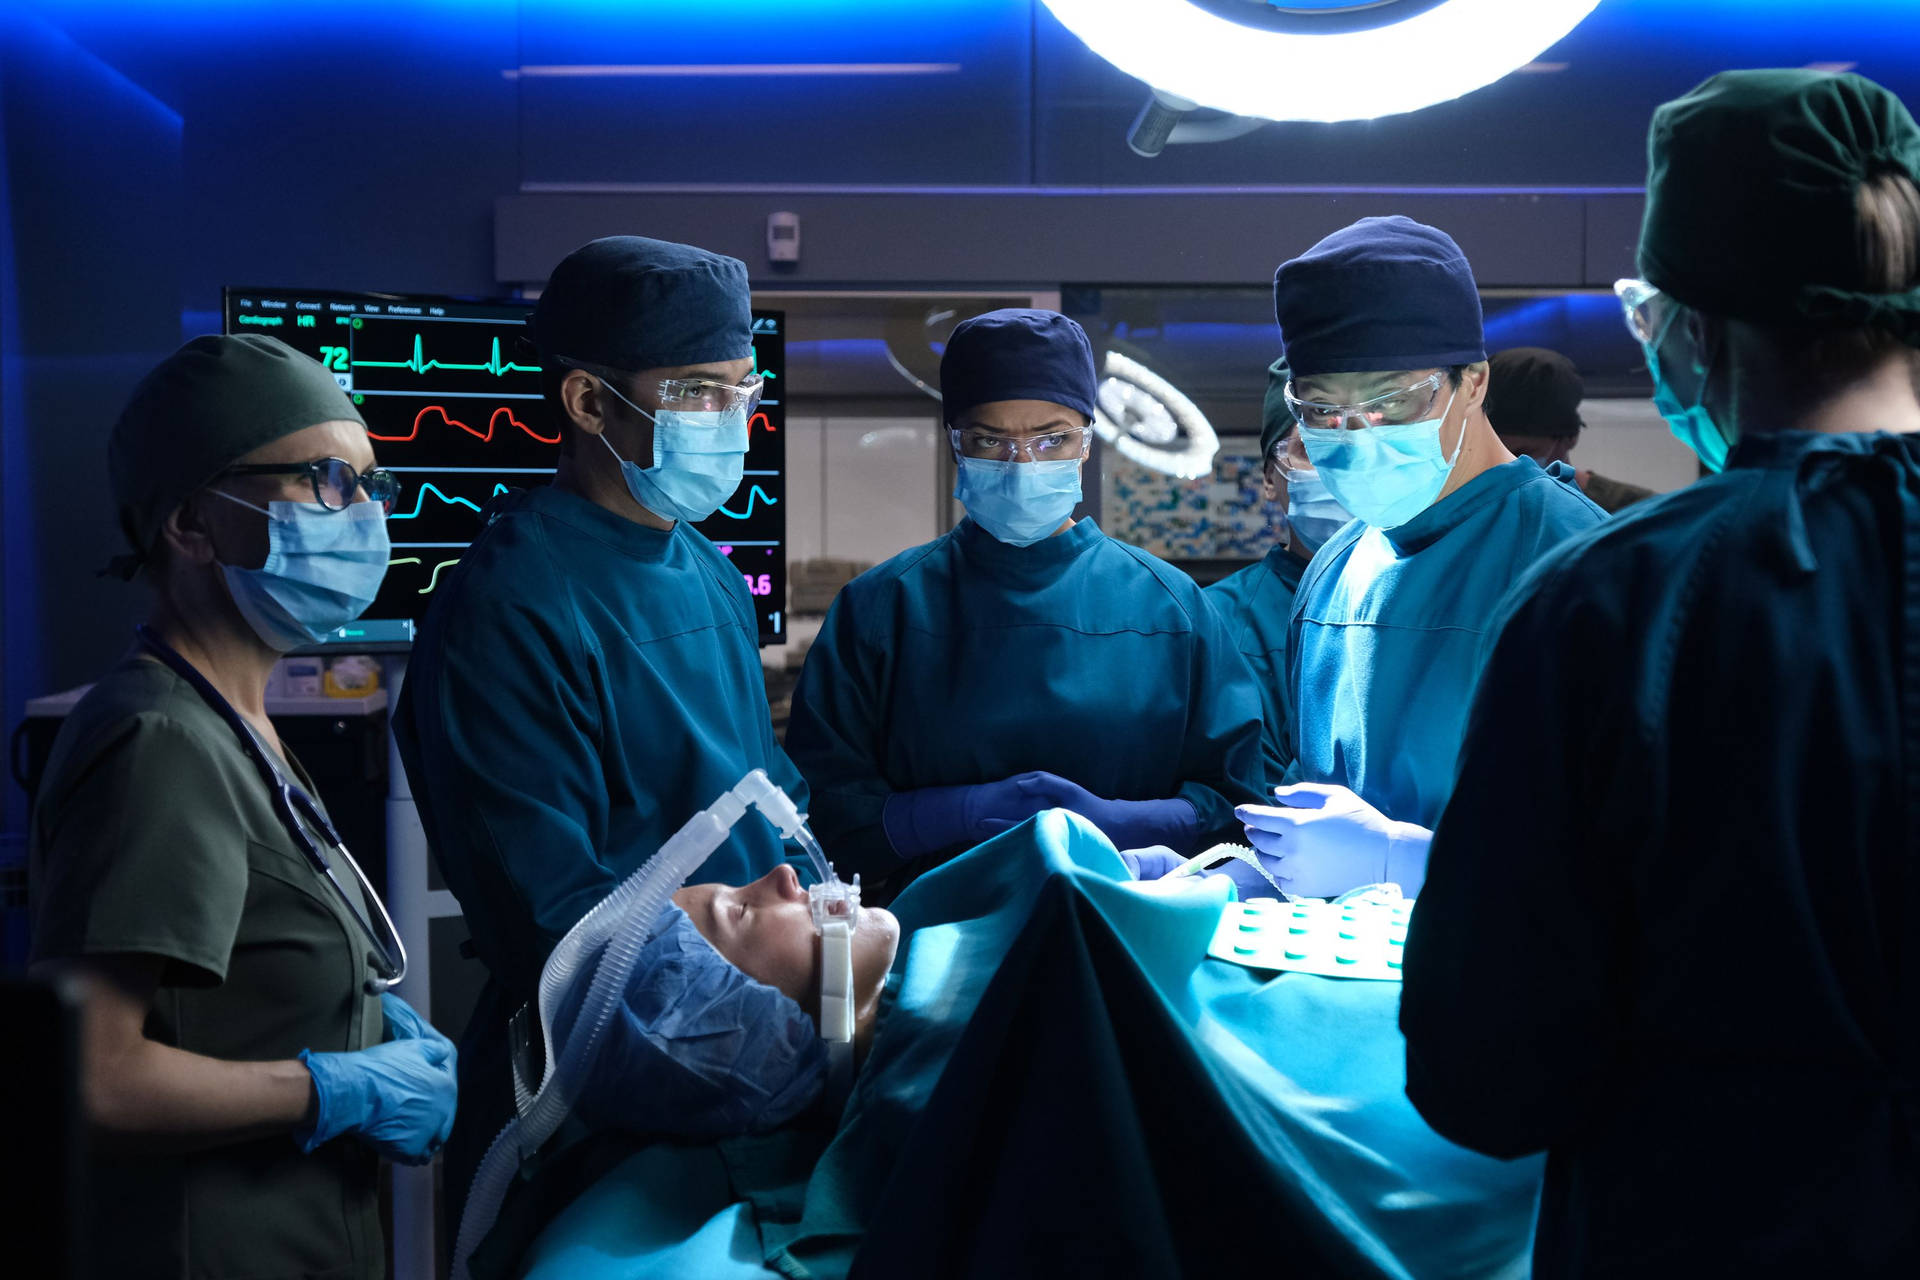 The Good Doctor Surgery Room Scene